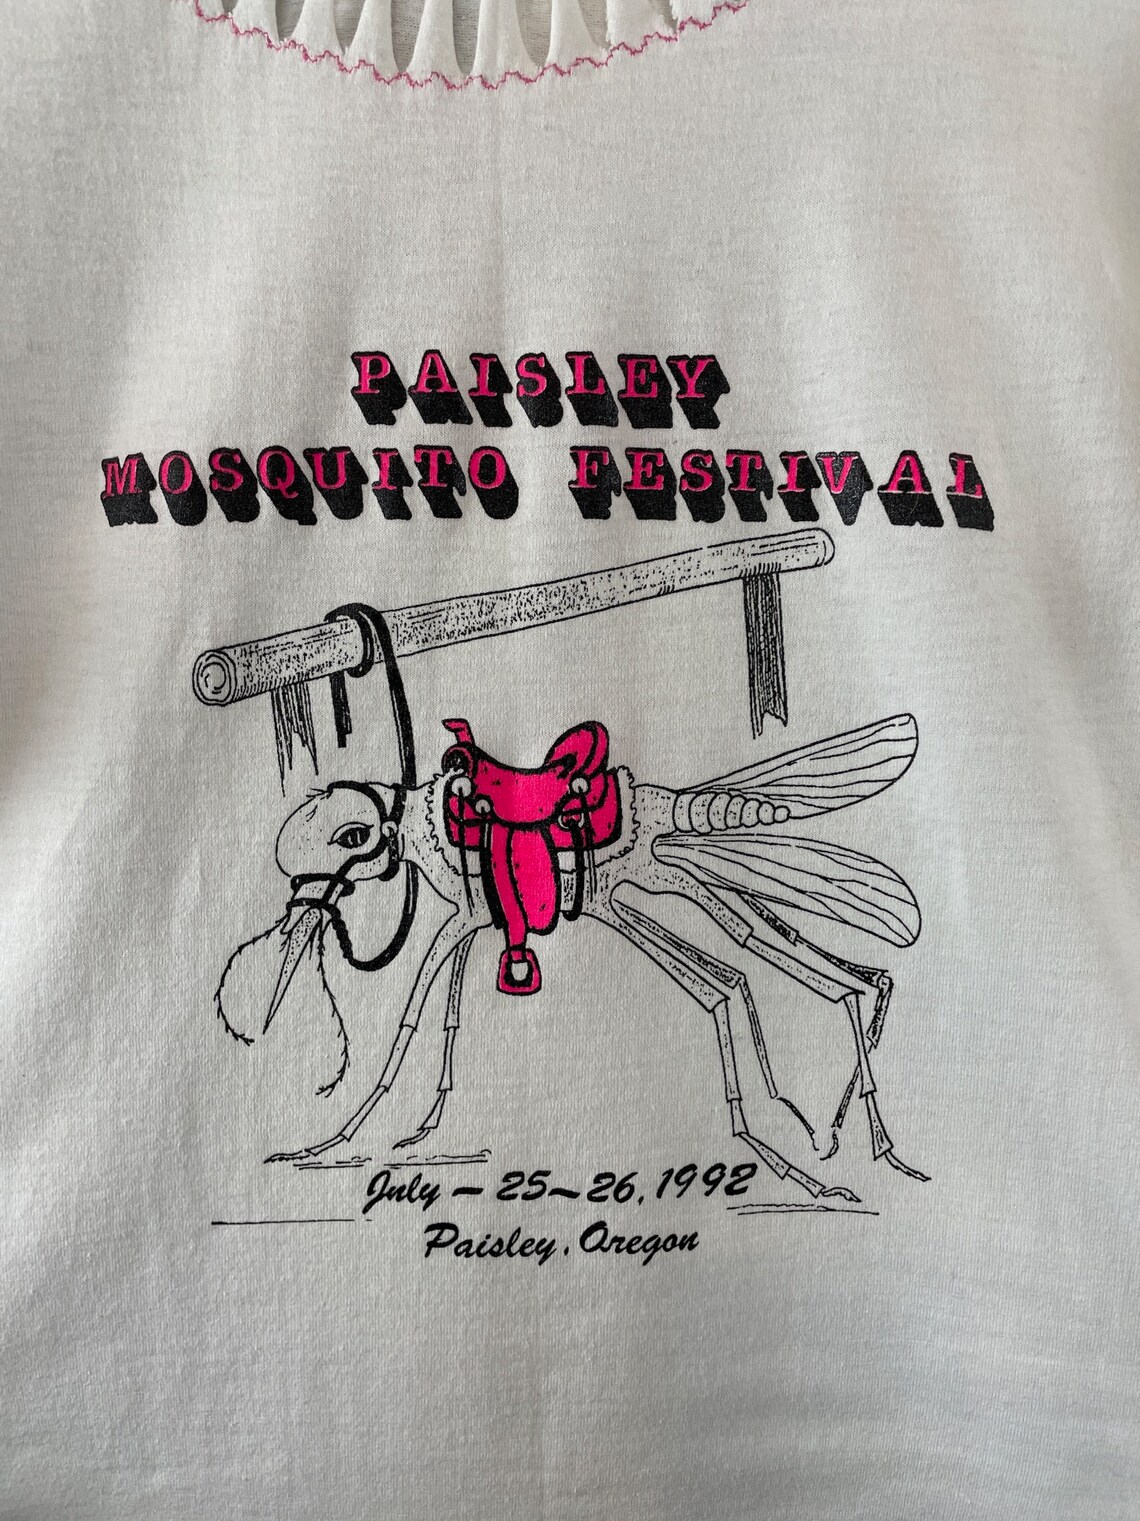 Vintage 1990s Customized 'Paisley Mosquito Festival' Etsy